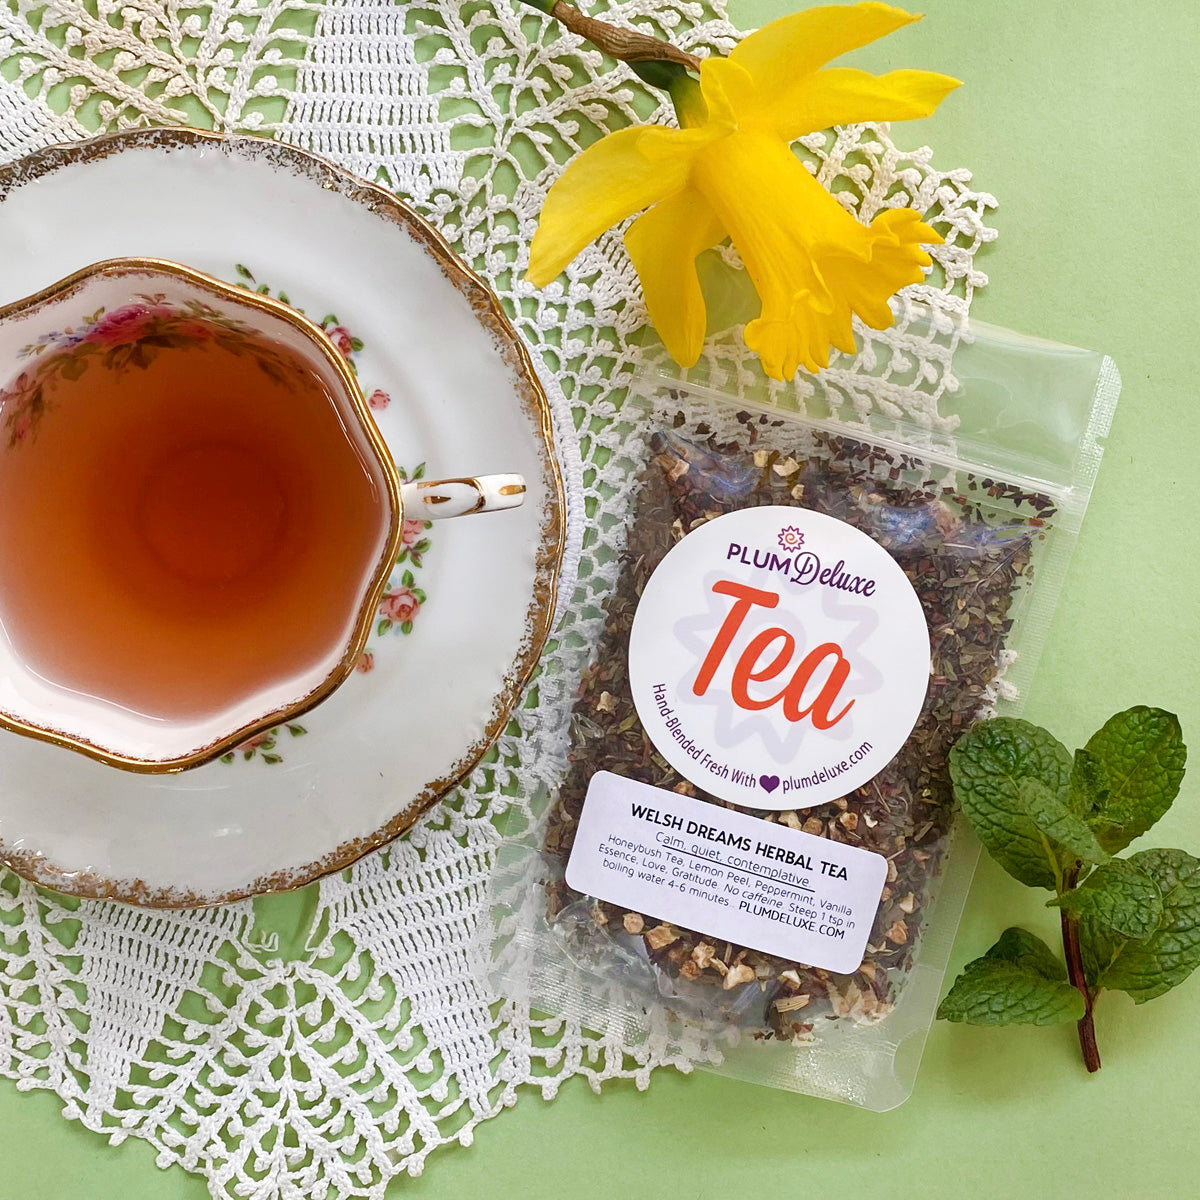 Welsh Dreams Herbal Tea (Vanilla - Lemon - Mint) by Plum Deluxe Tea